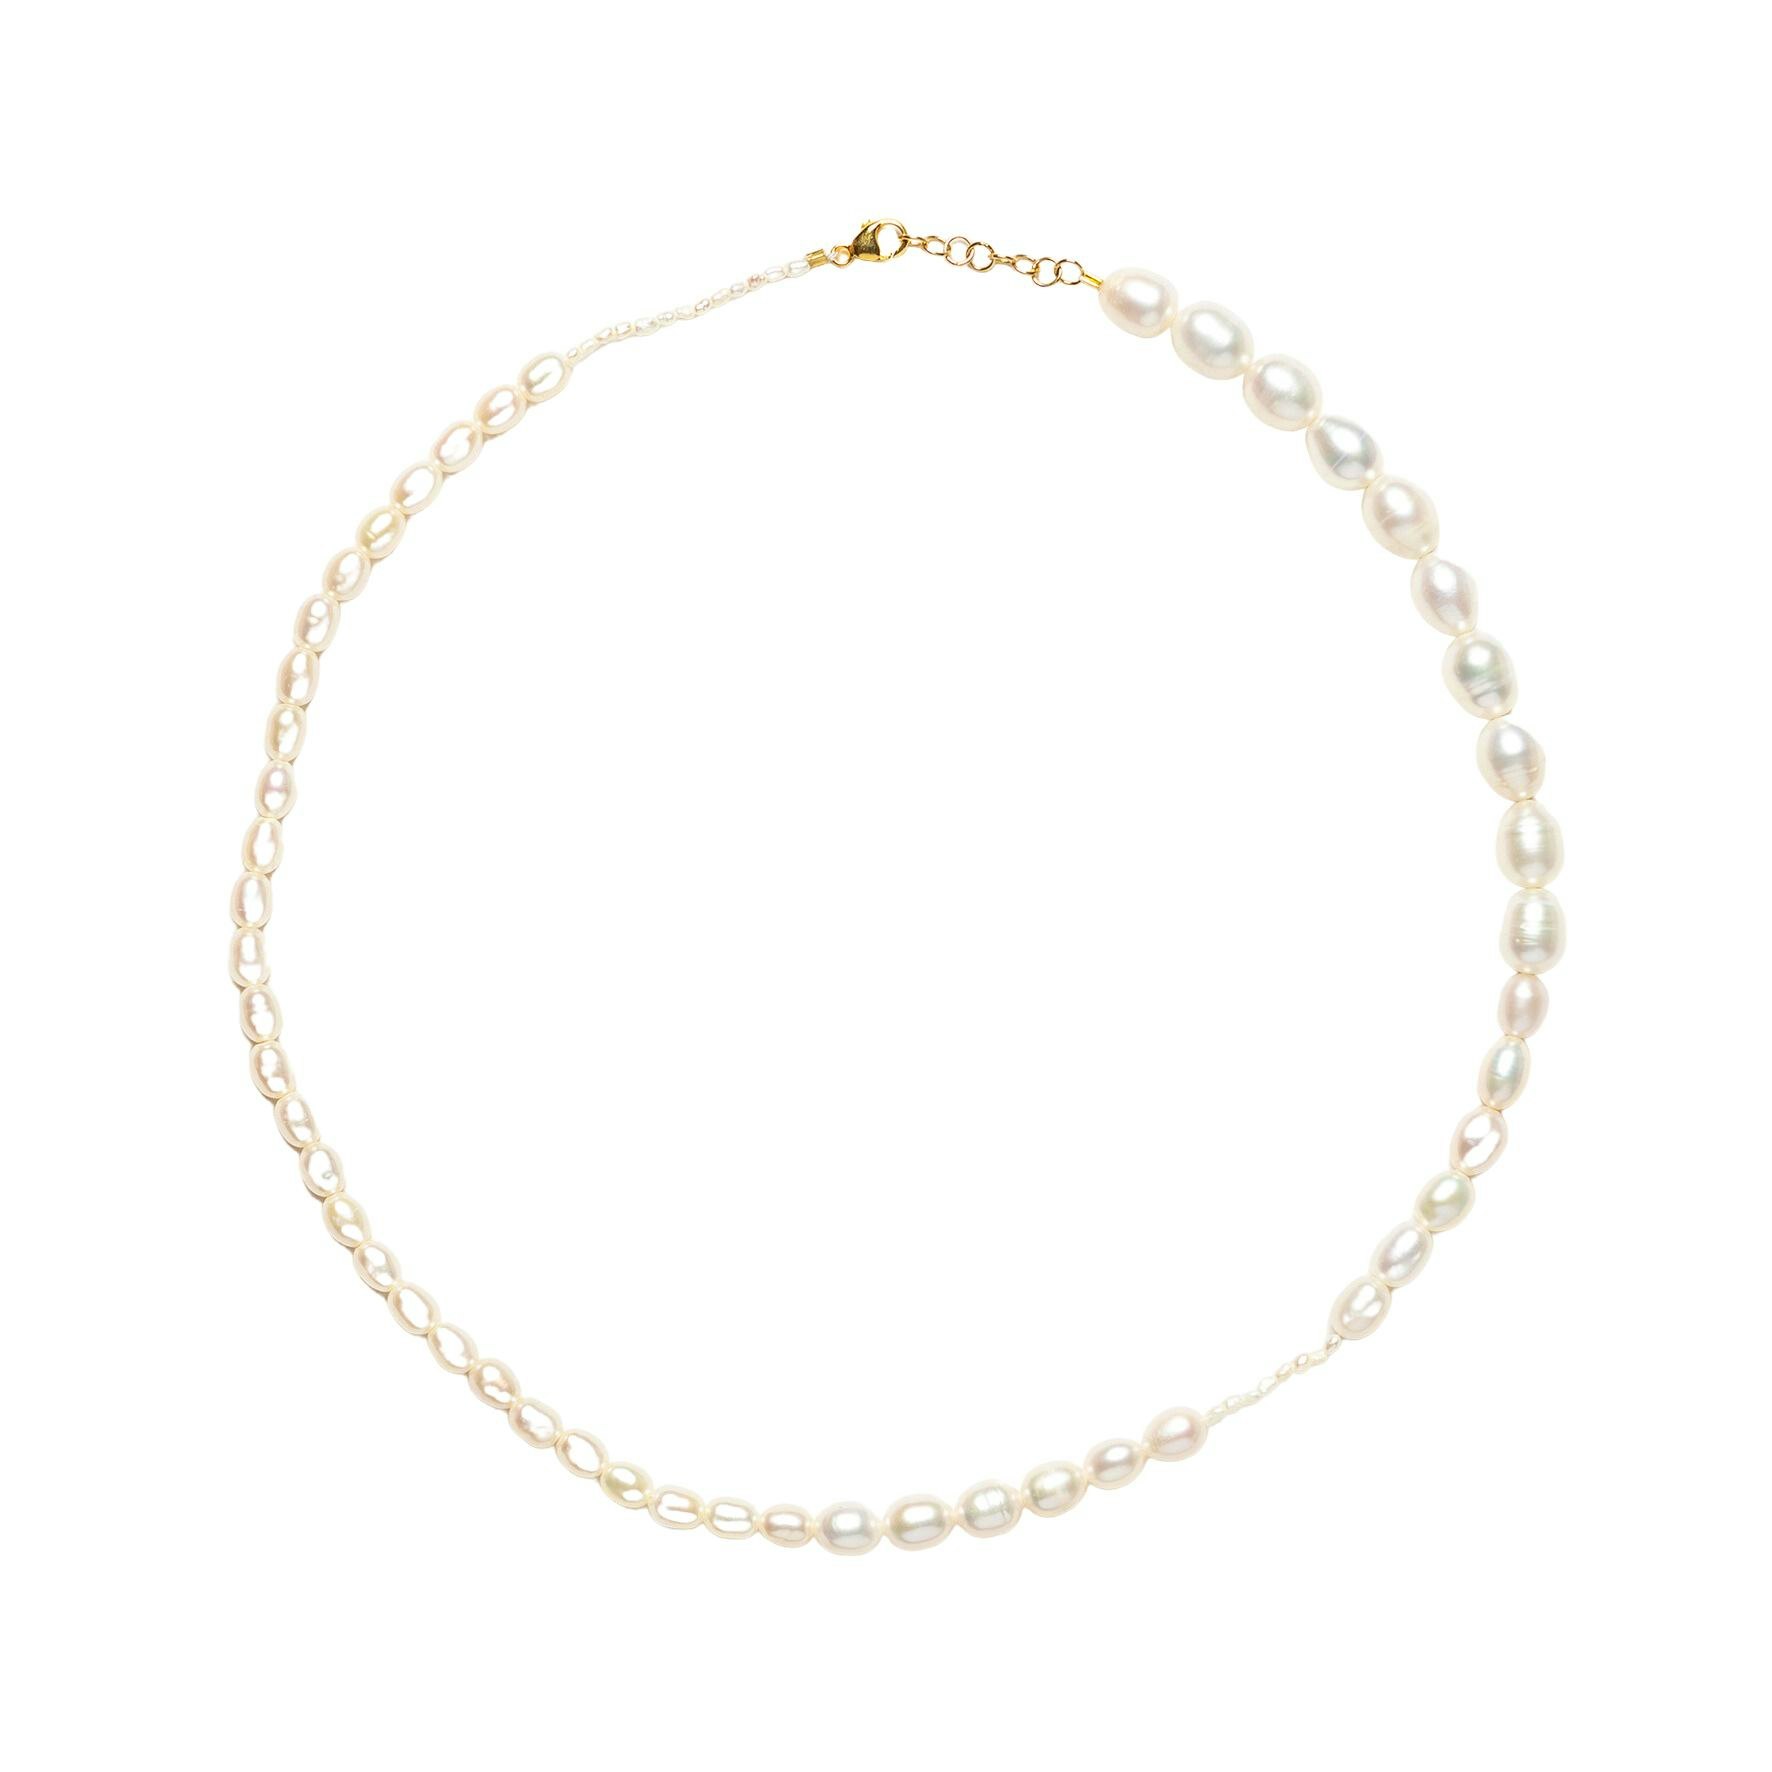 Cloud Necklace von Sorelle Jewellery in Vergoldet-Silber Sterling 925